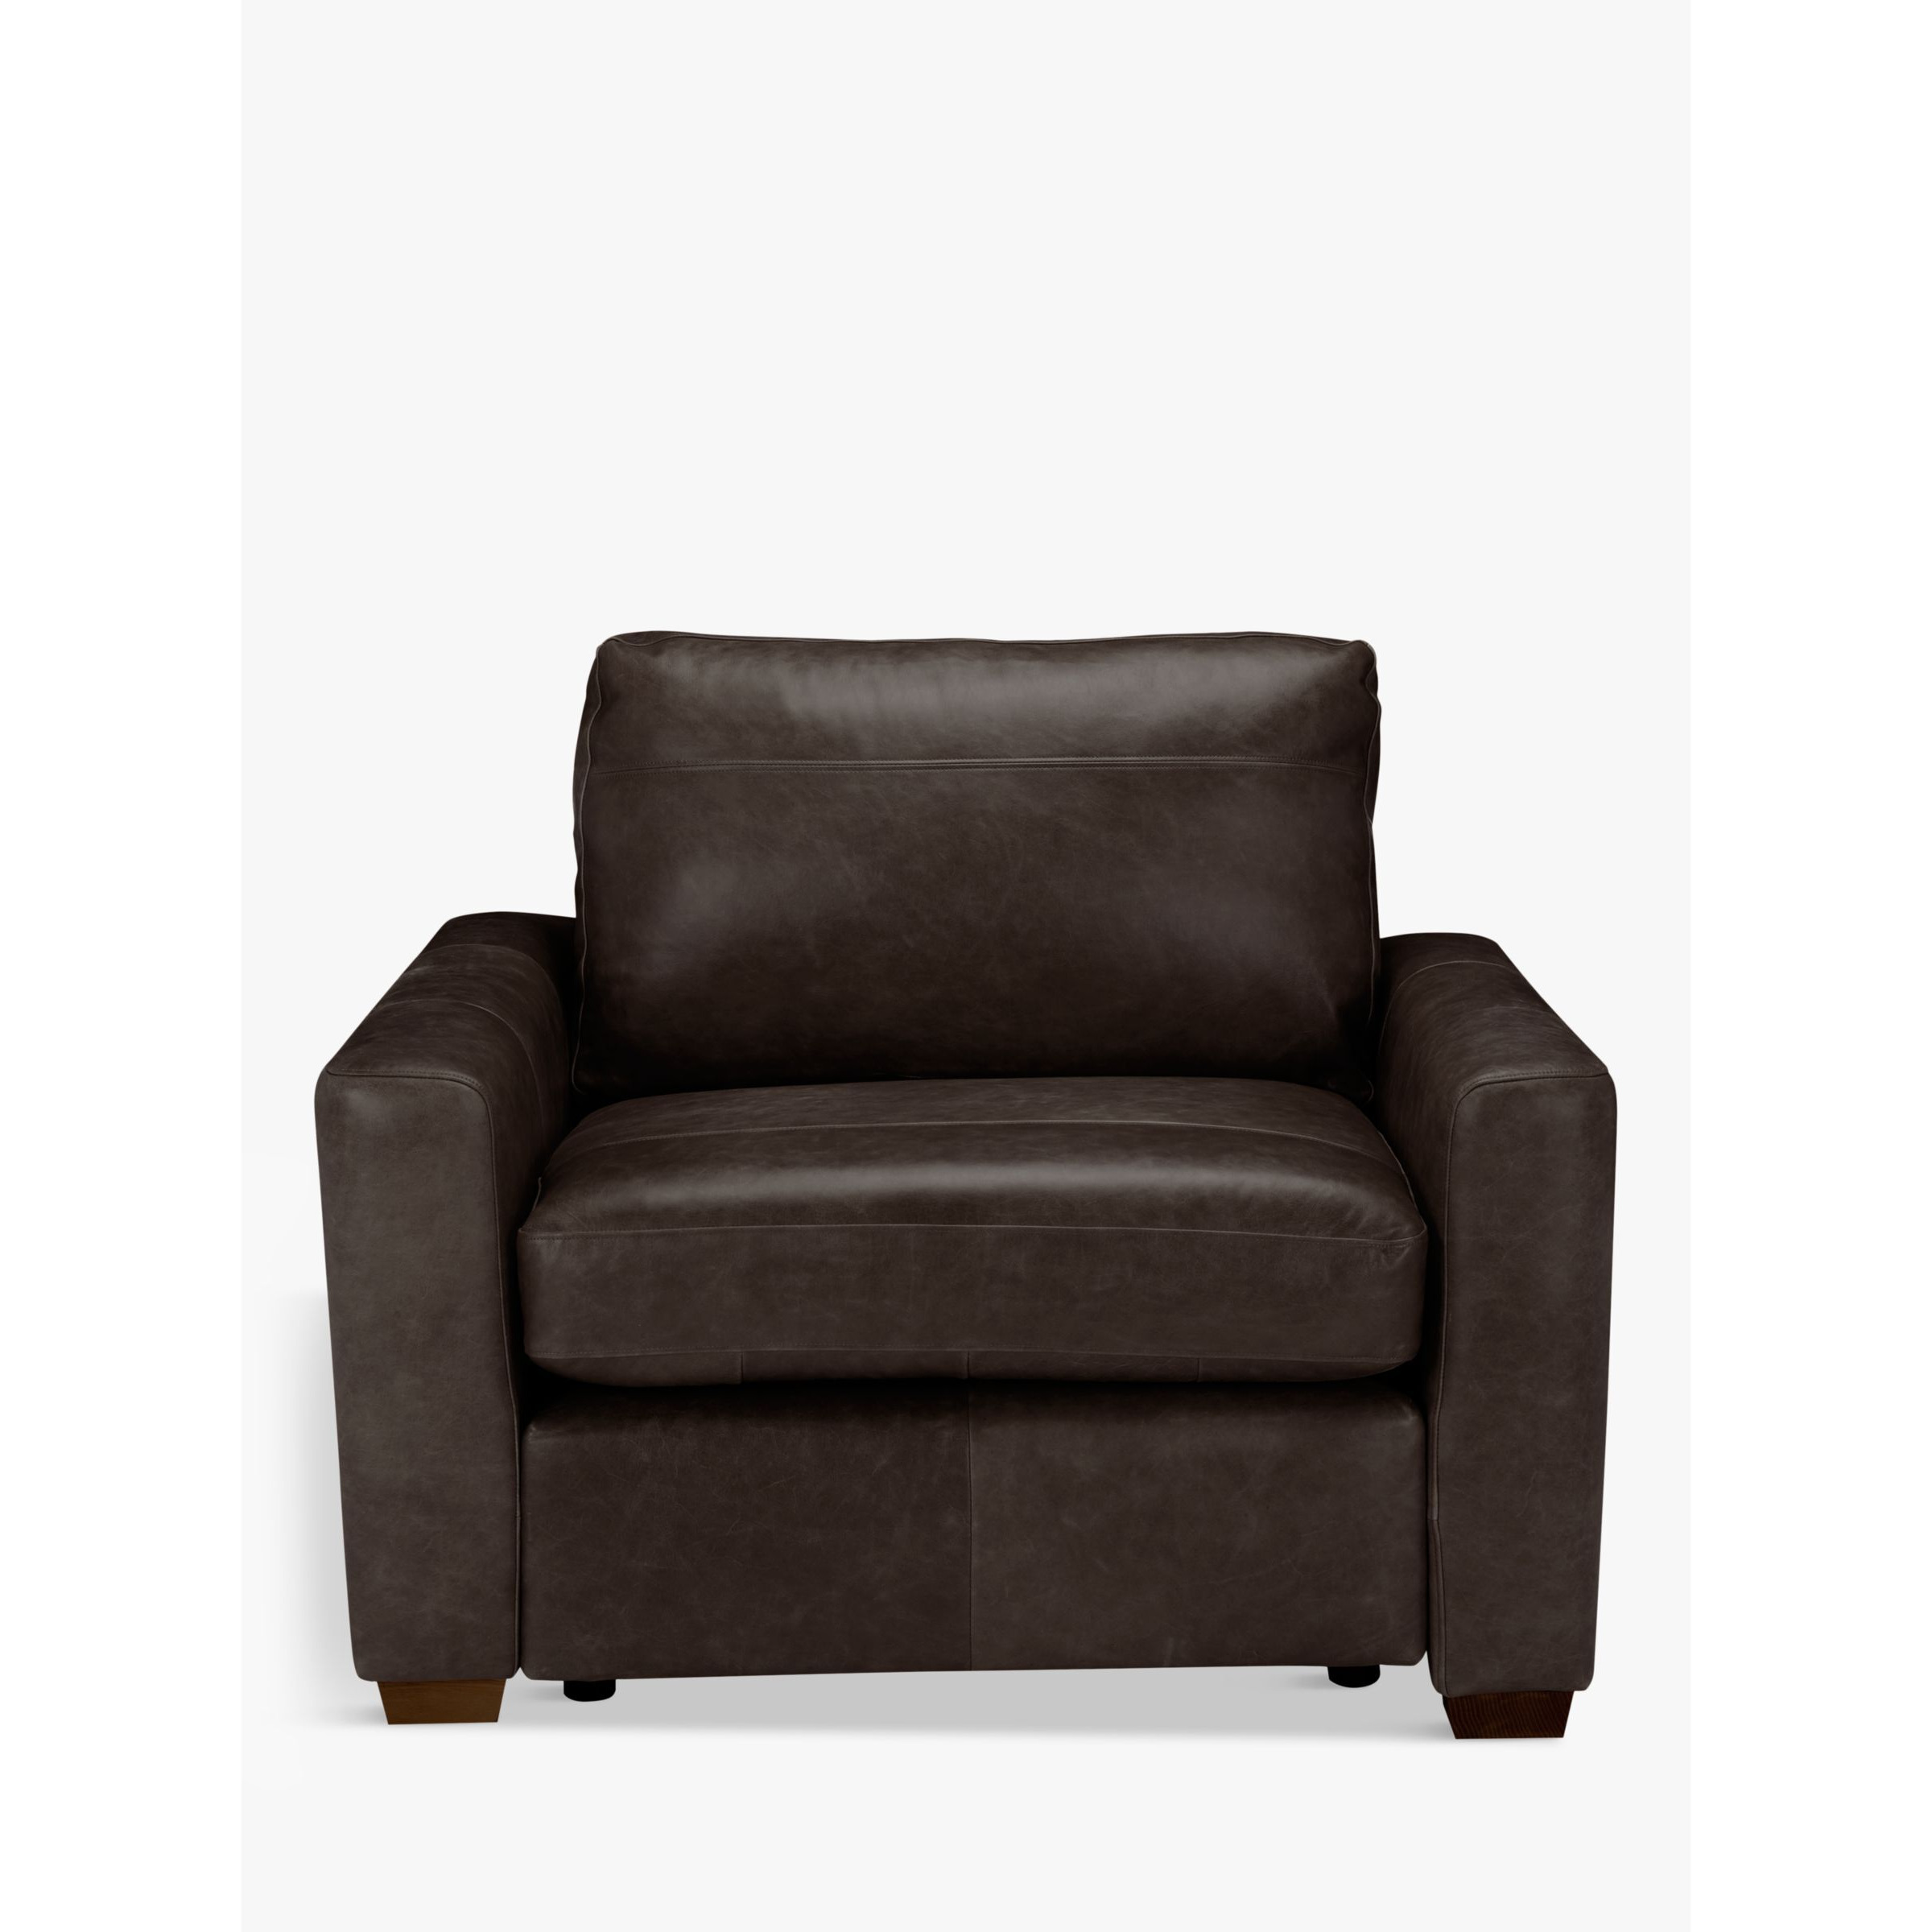 John Lewis Oliver Leather Armchair, Dark Leg - image 1